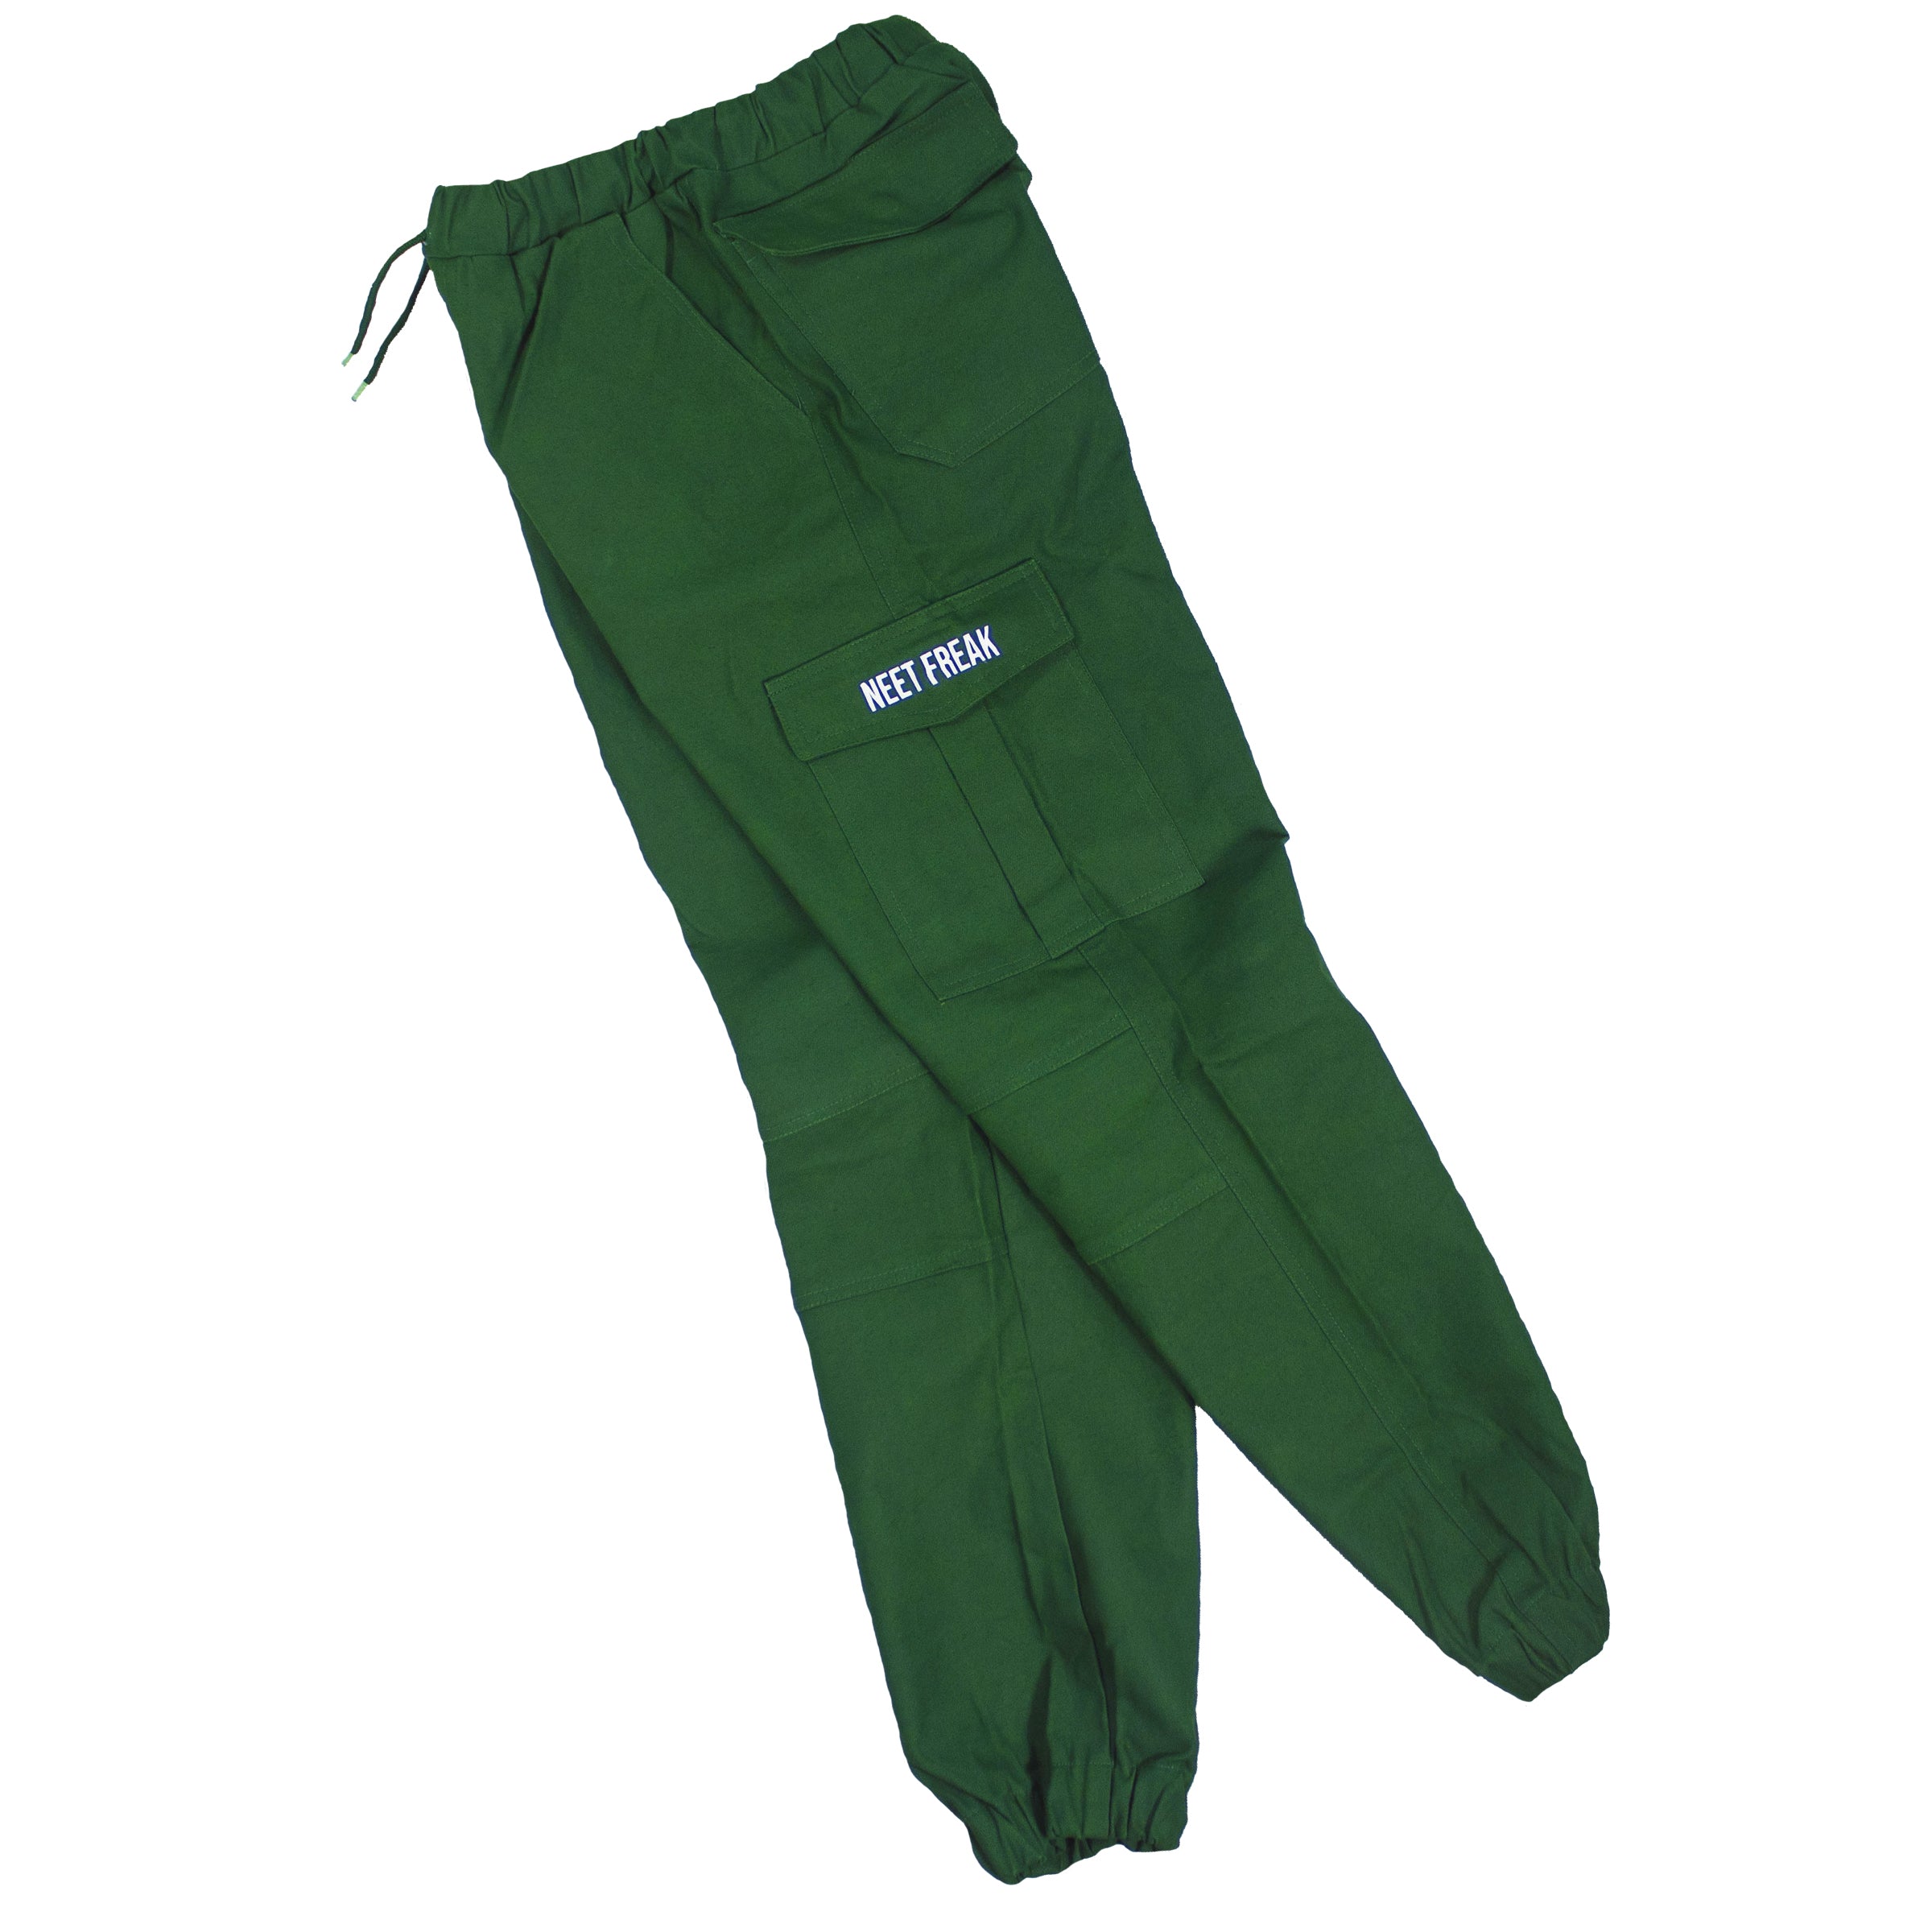 Neet Freak Cargo Pants (Olive Green)